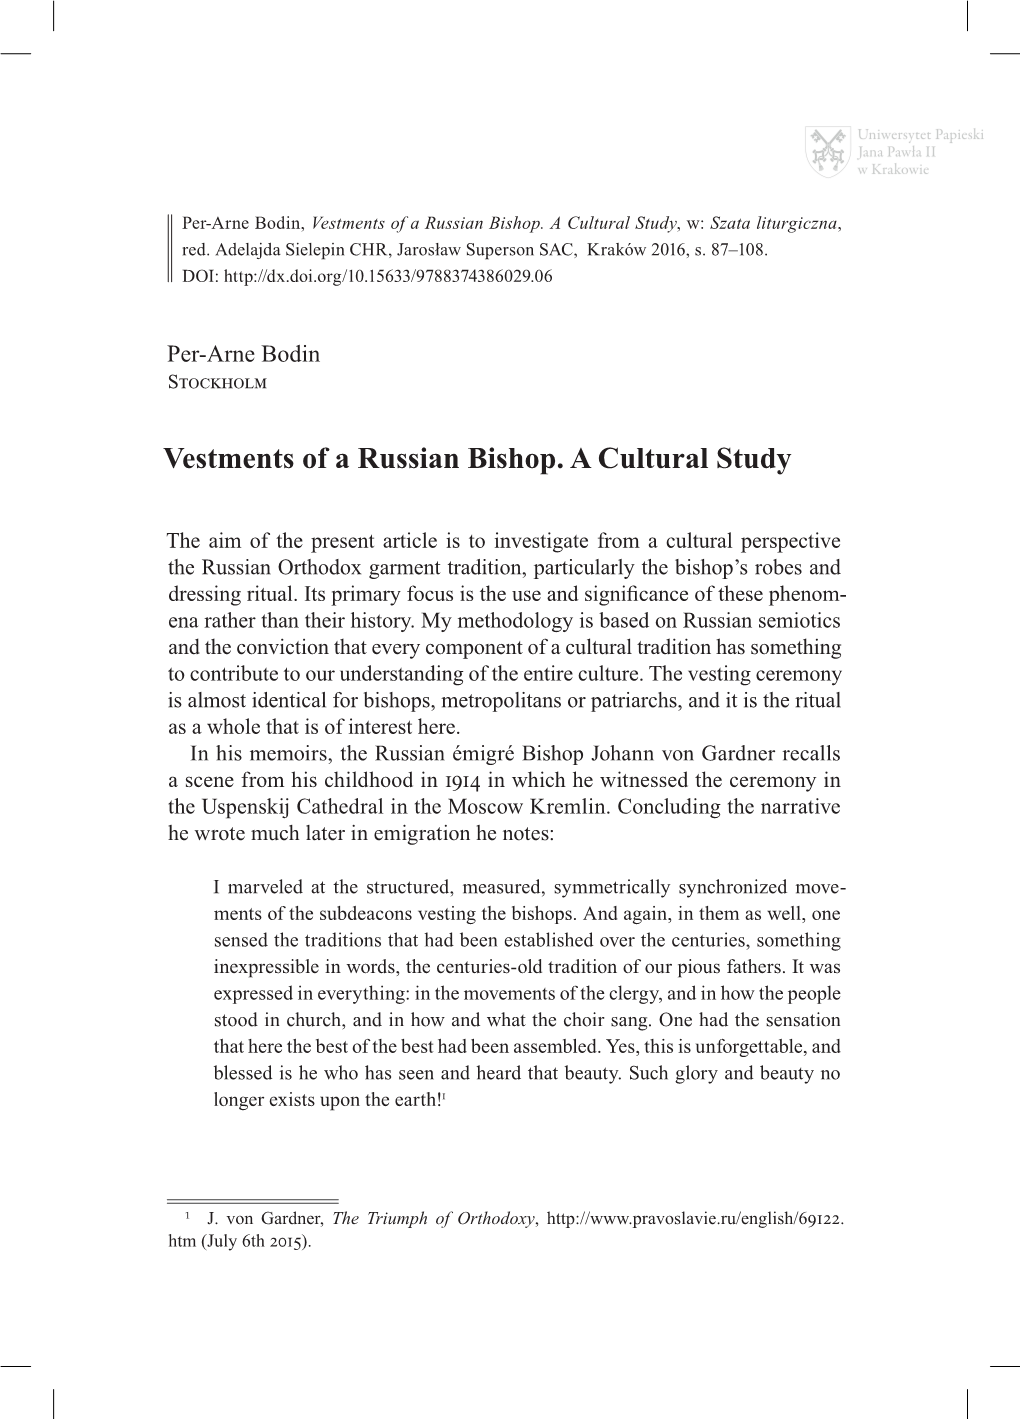 Vestments of a Russian Bishop. a Cultural Study, W: Szata Liturgiczna, Red